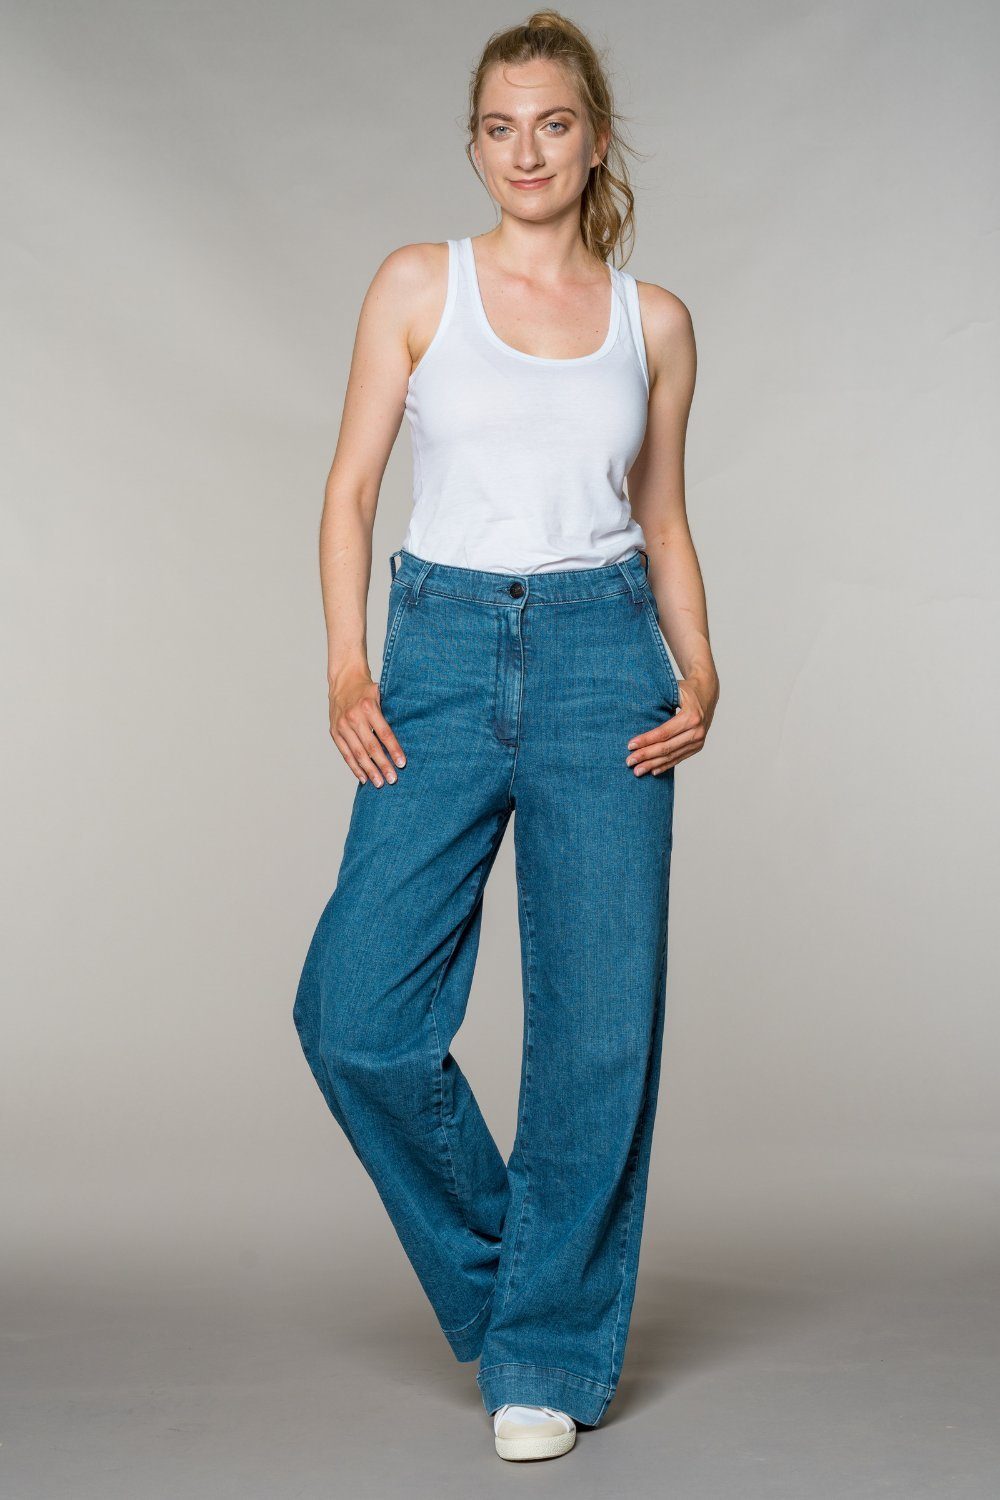 Feuervogl High-waist-Jeans fv-Fr:051, Weites Bein, Hohe Taille, Hyperflex 5-Pocket-Style, High Waist, Wide Leg, Hyperflex Middle Blue